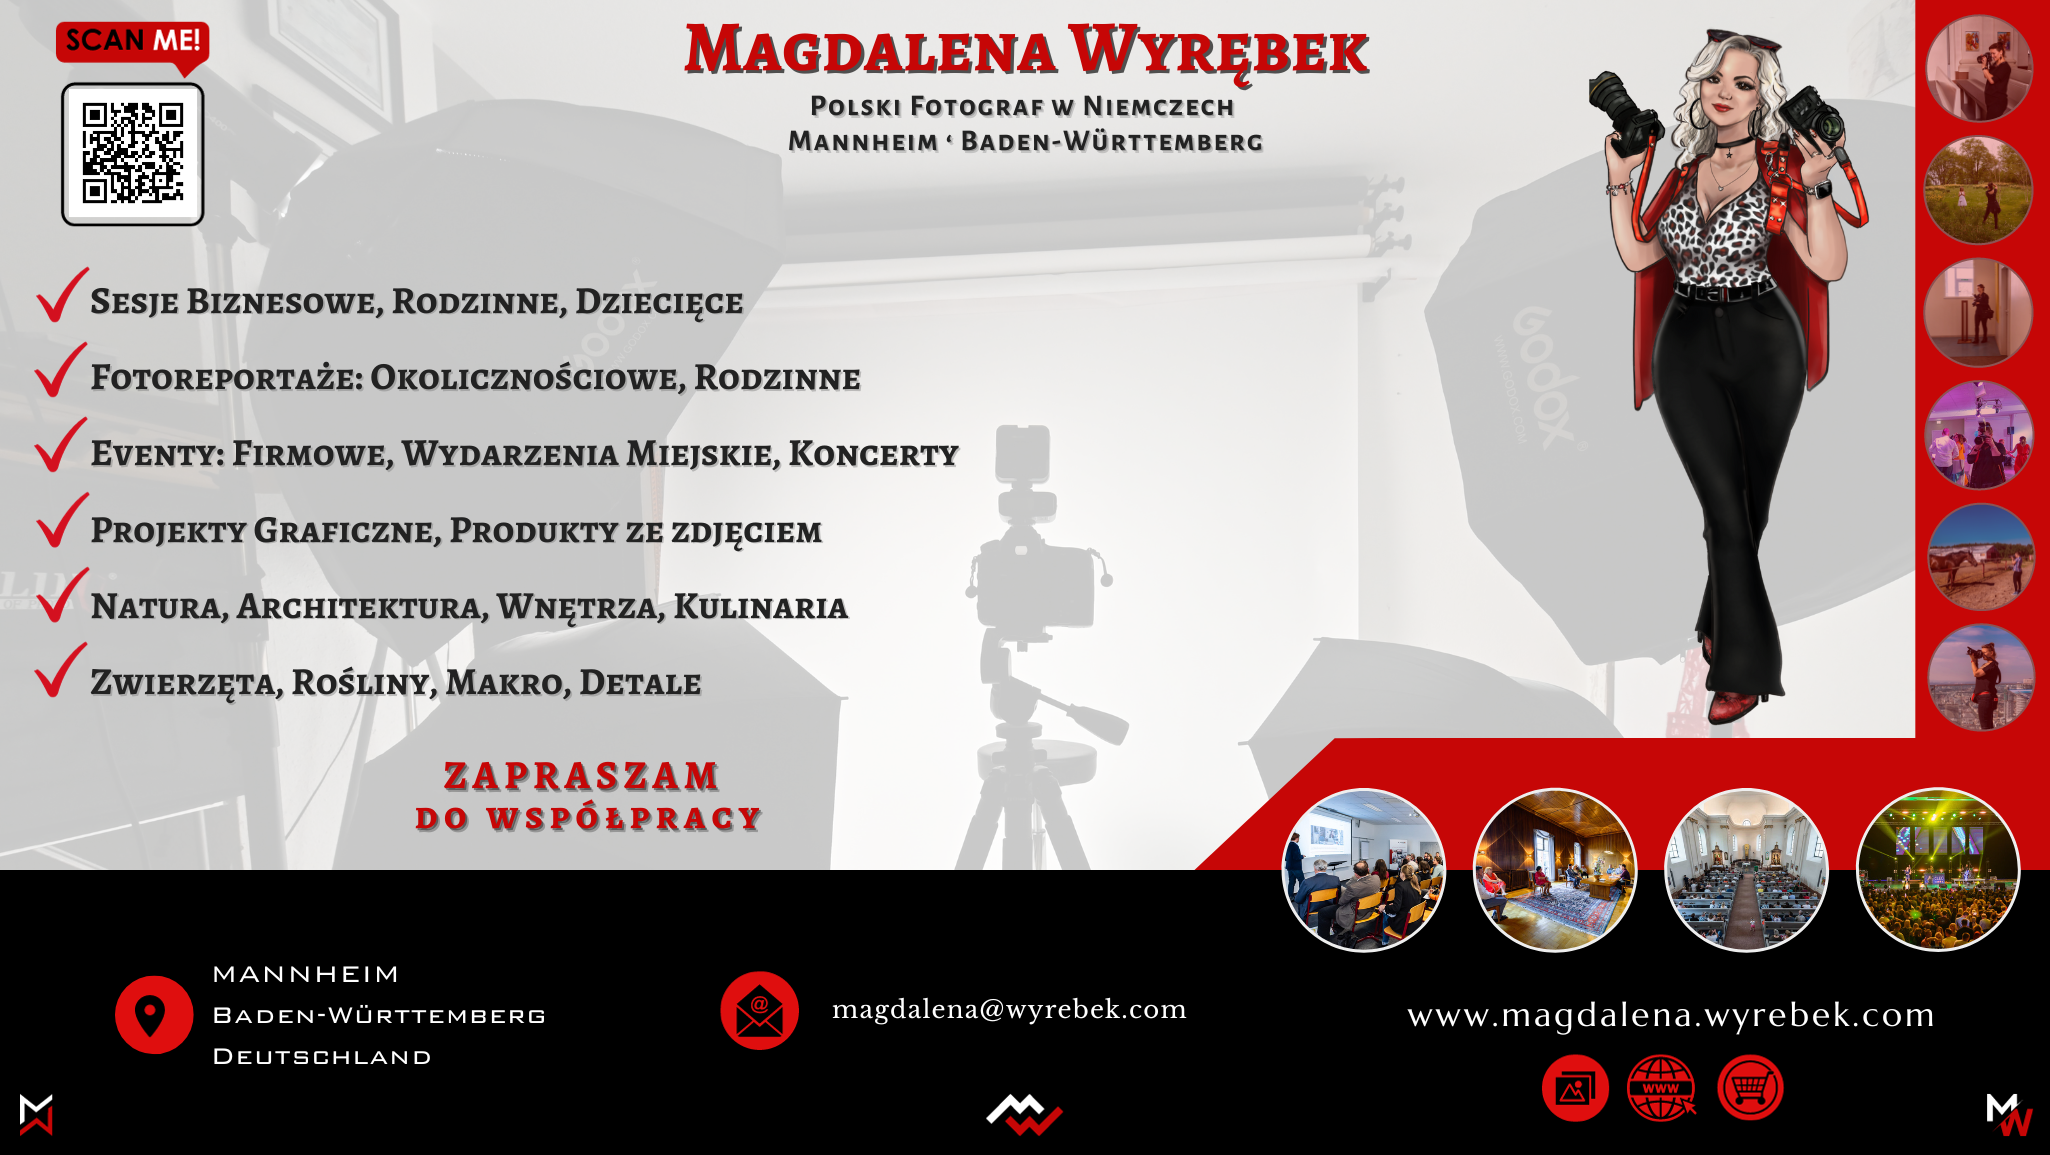 Wyrebek Magdalena - Fotografie, Grafikdesign, Internethandel mit Fotoprodukten